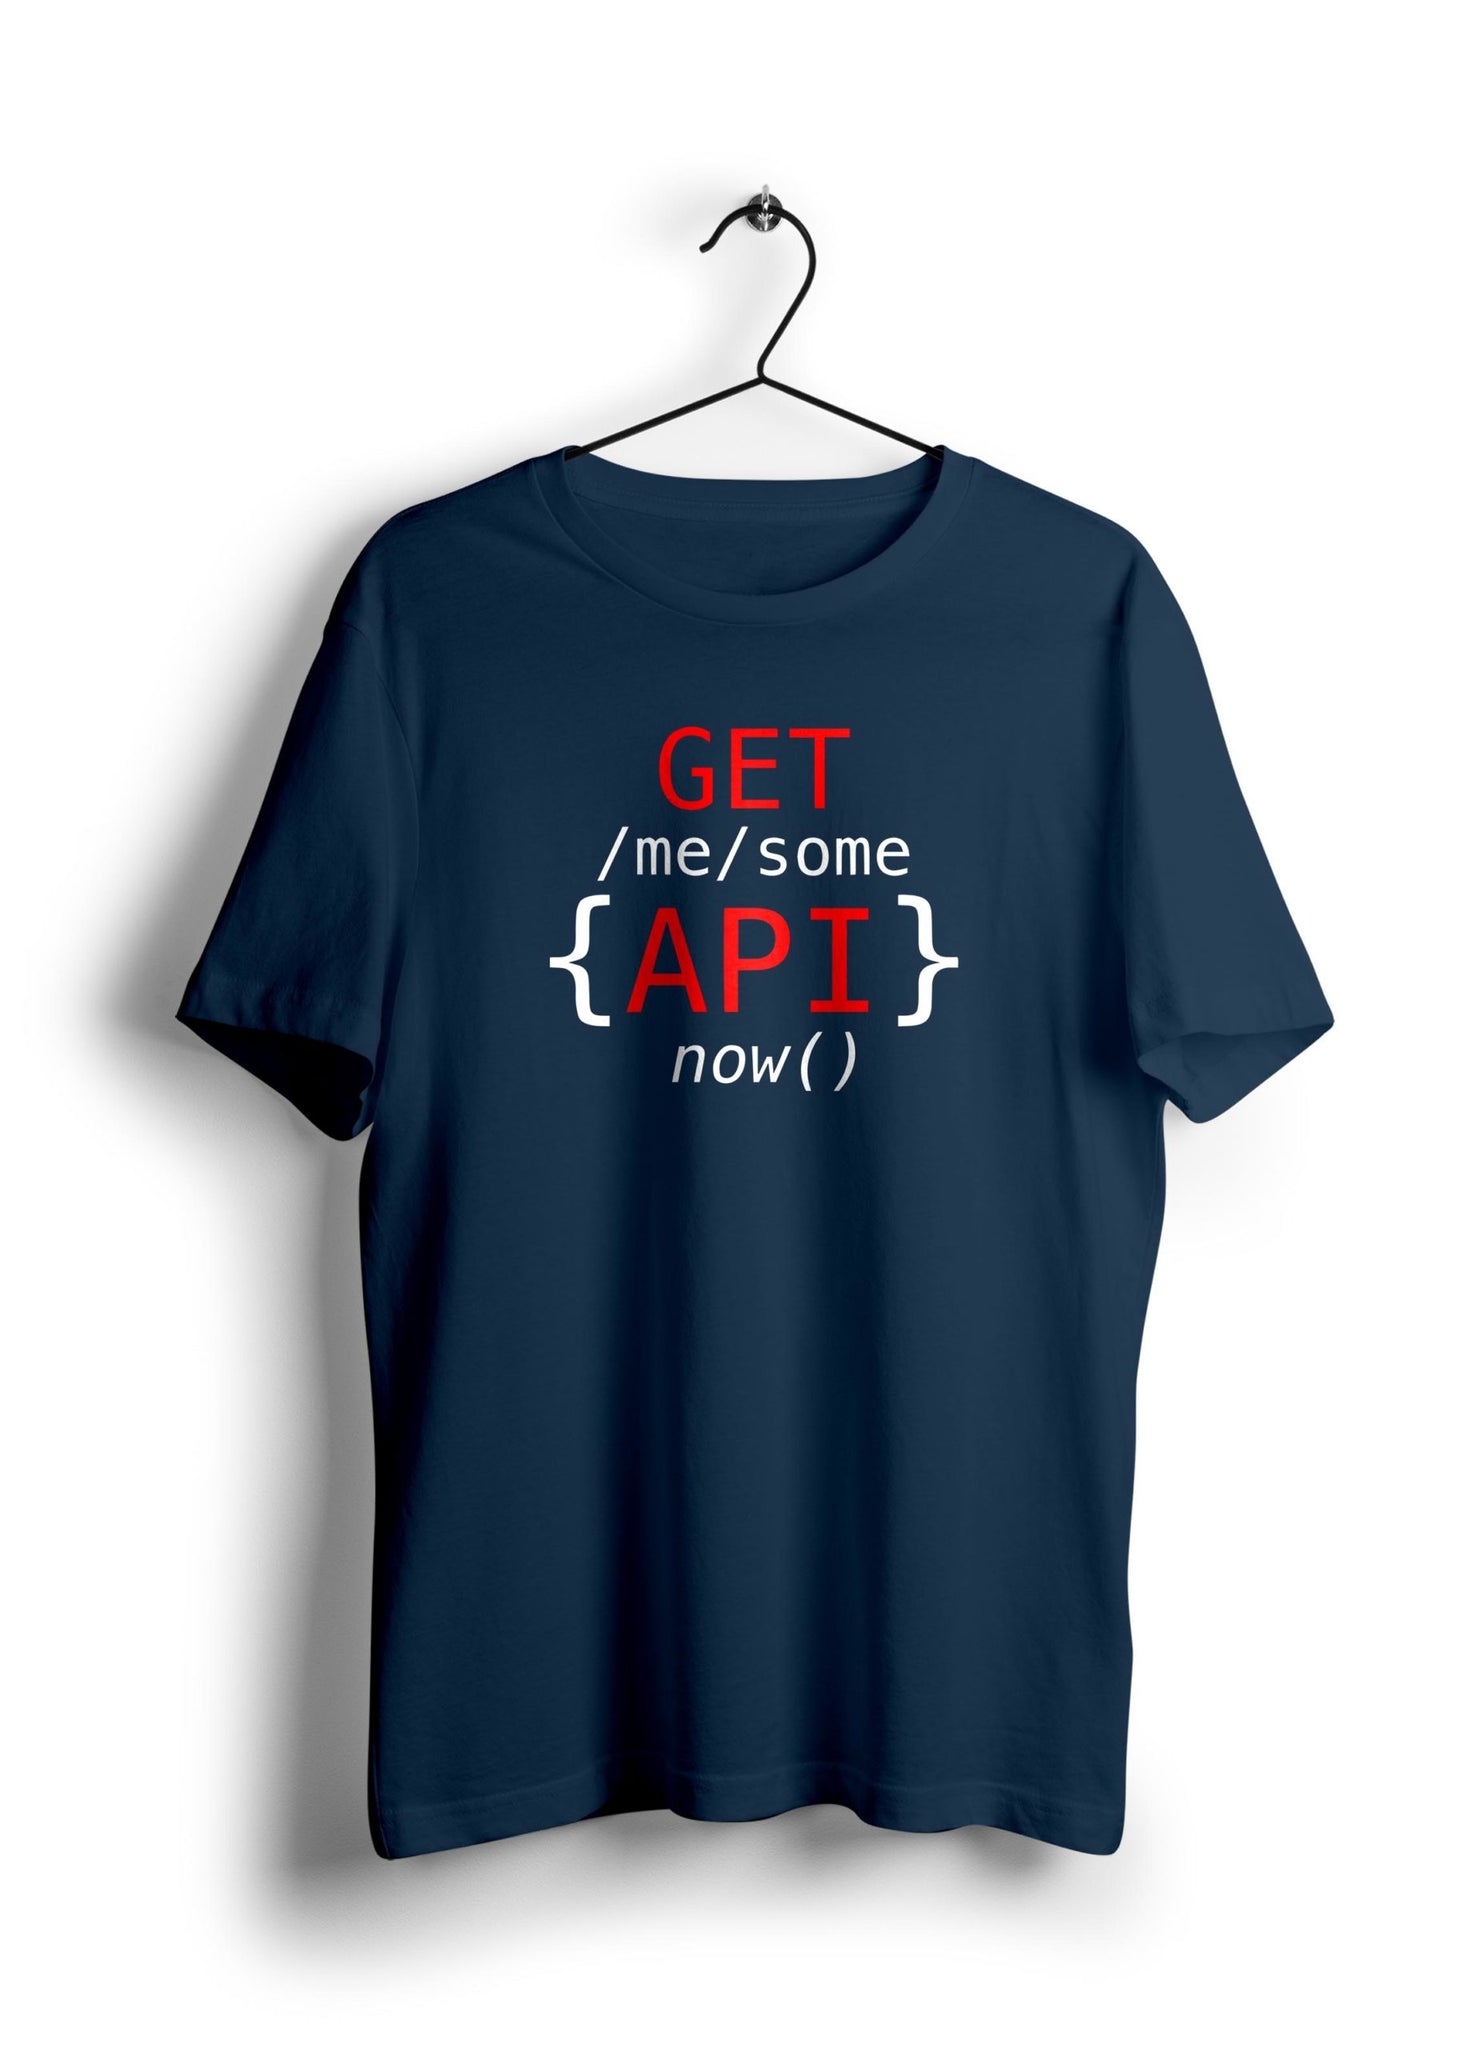 GET me some APIs now Half Sleeve T-Shirt